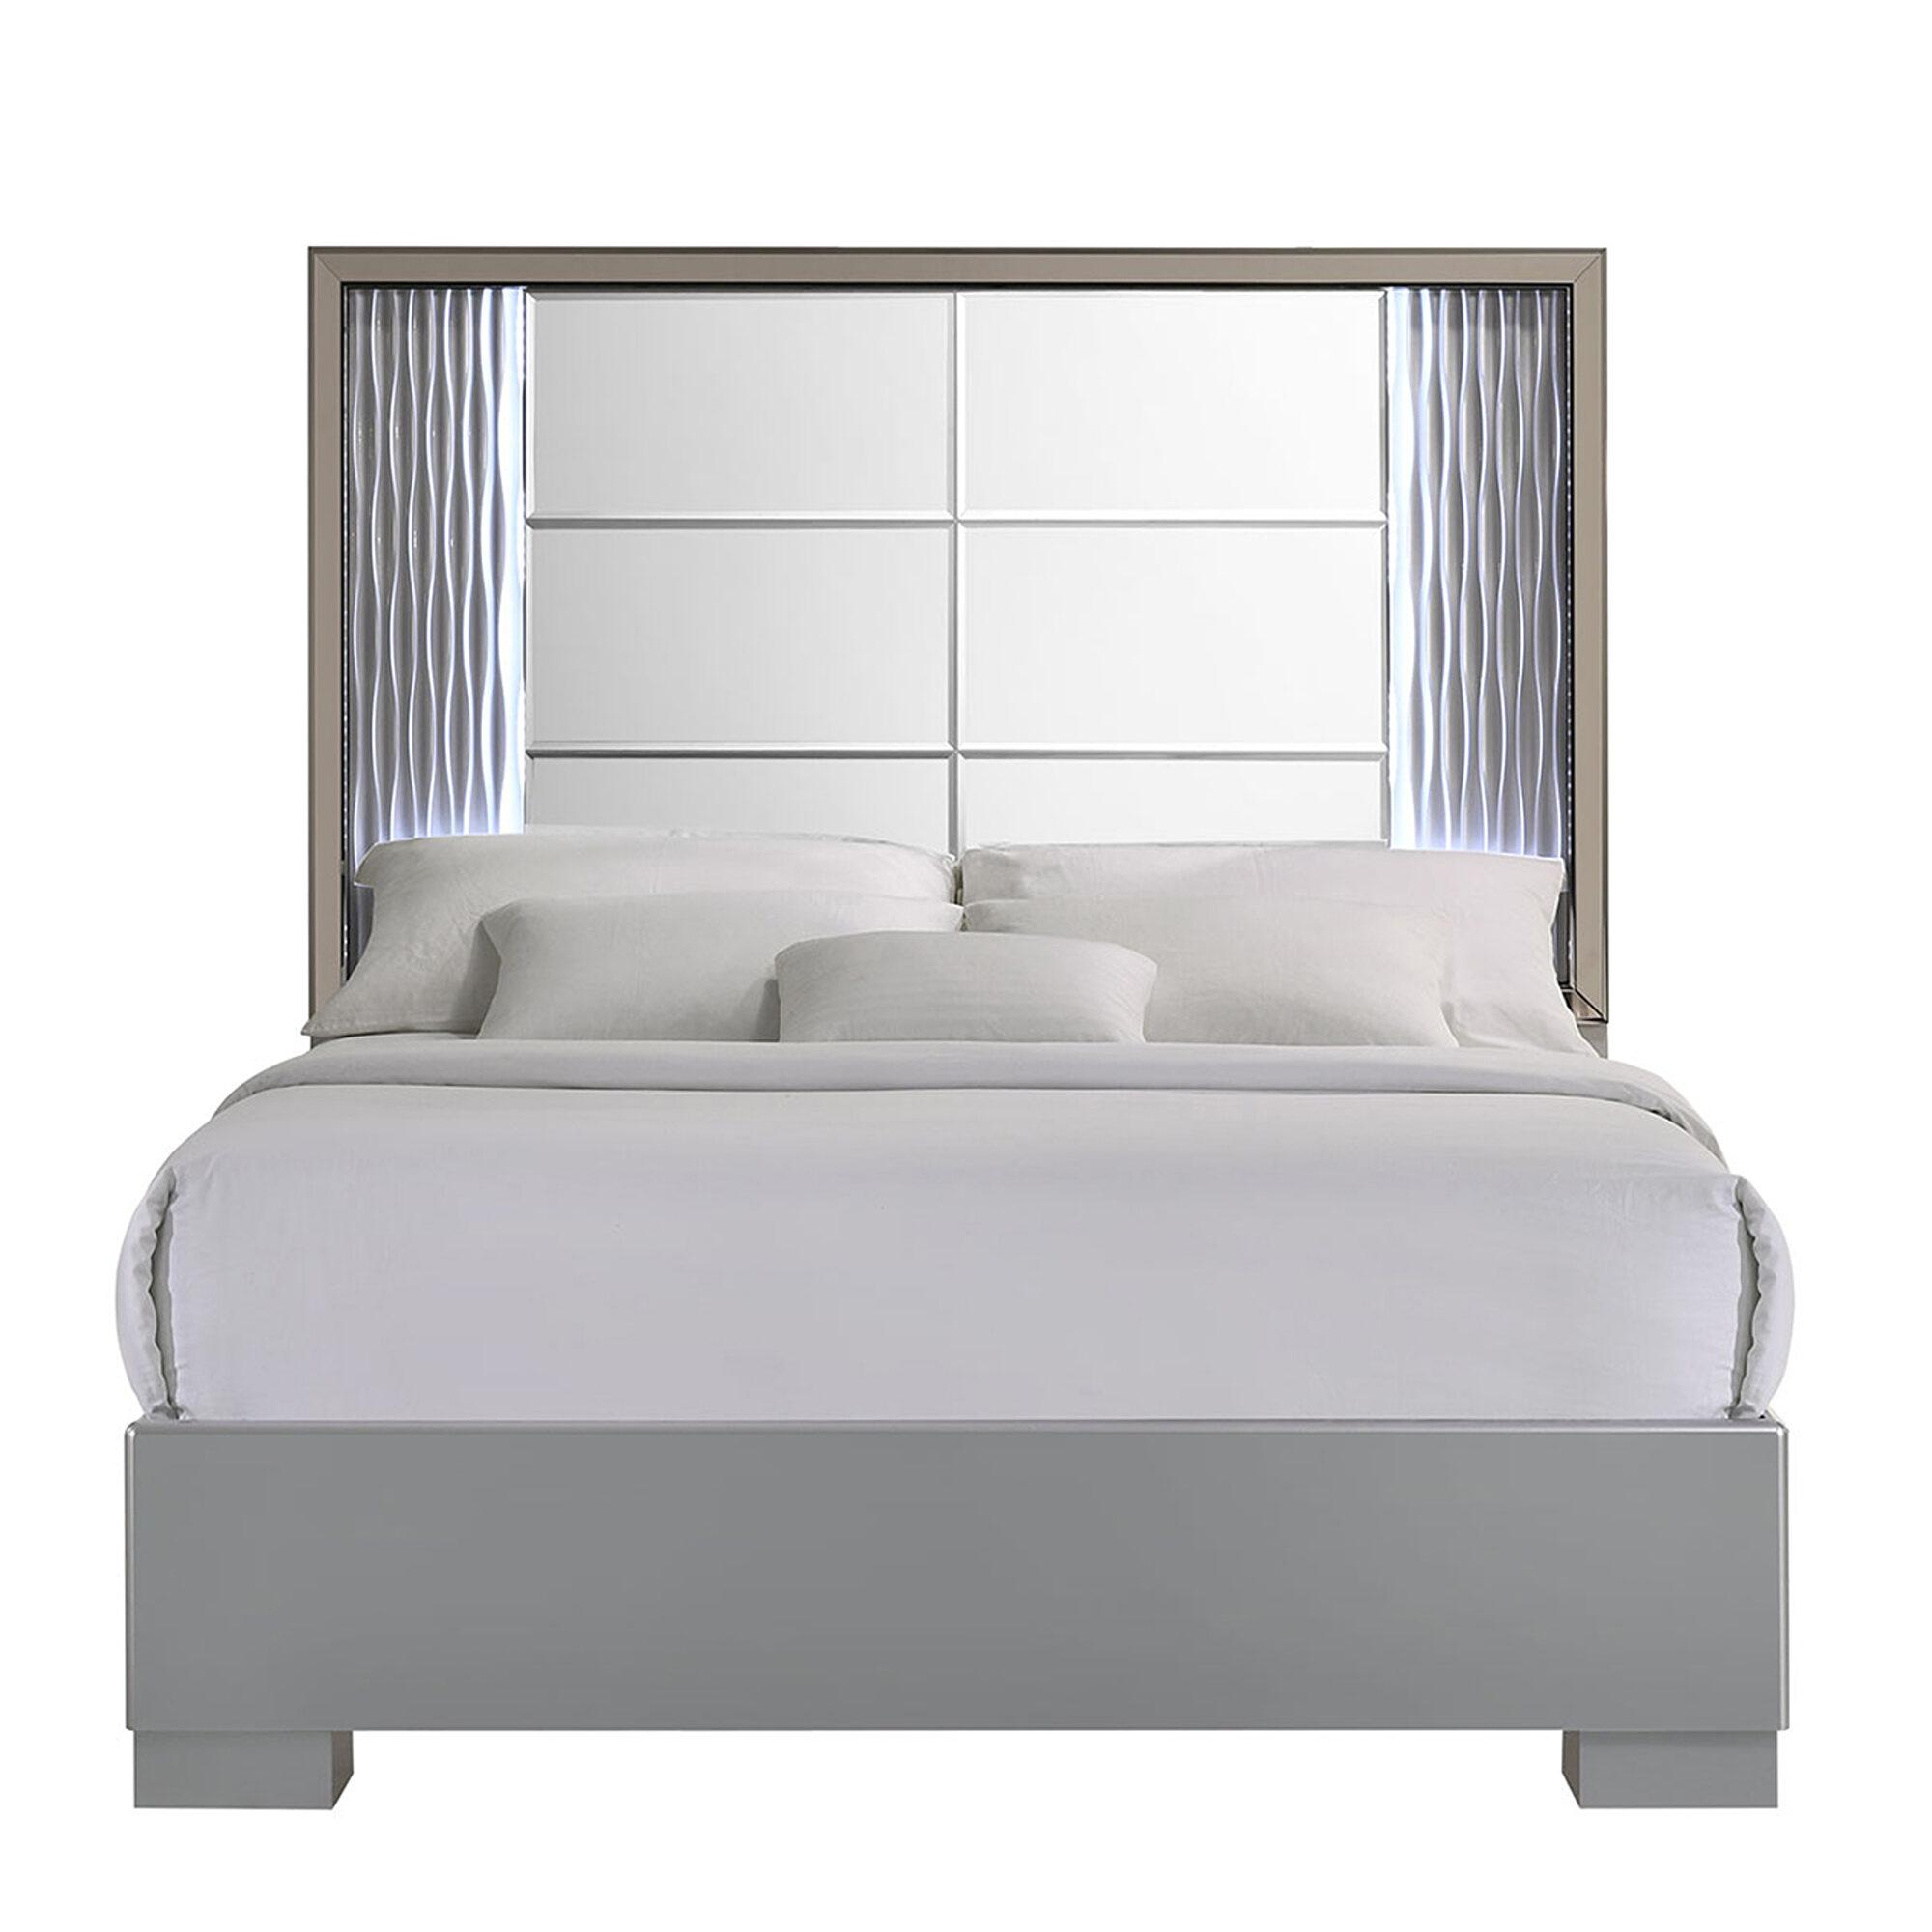 Contemporary Platform Bed SKYLINE SKYLINE-SILVER-QB in Mirrored, Silver 